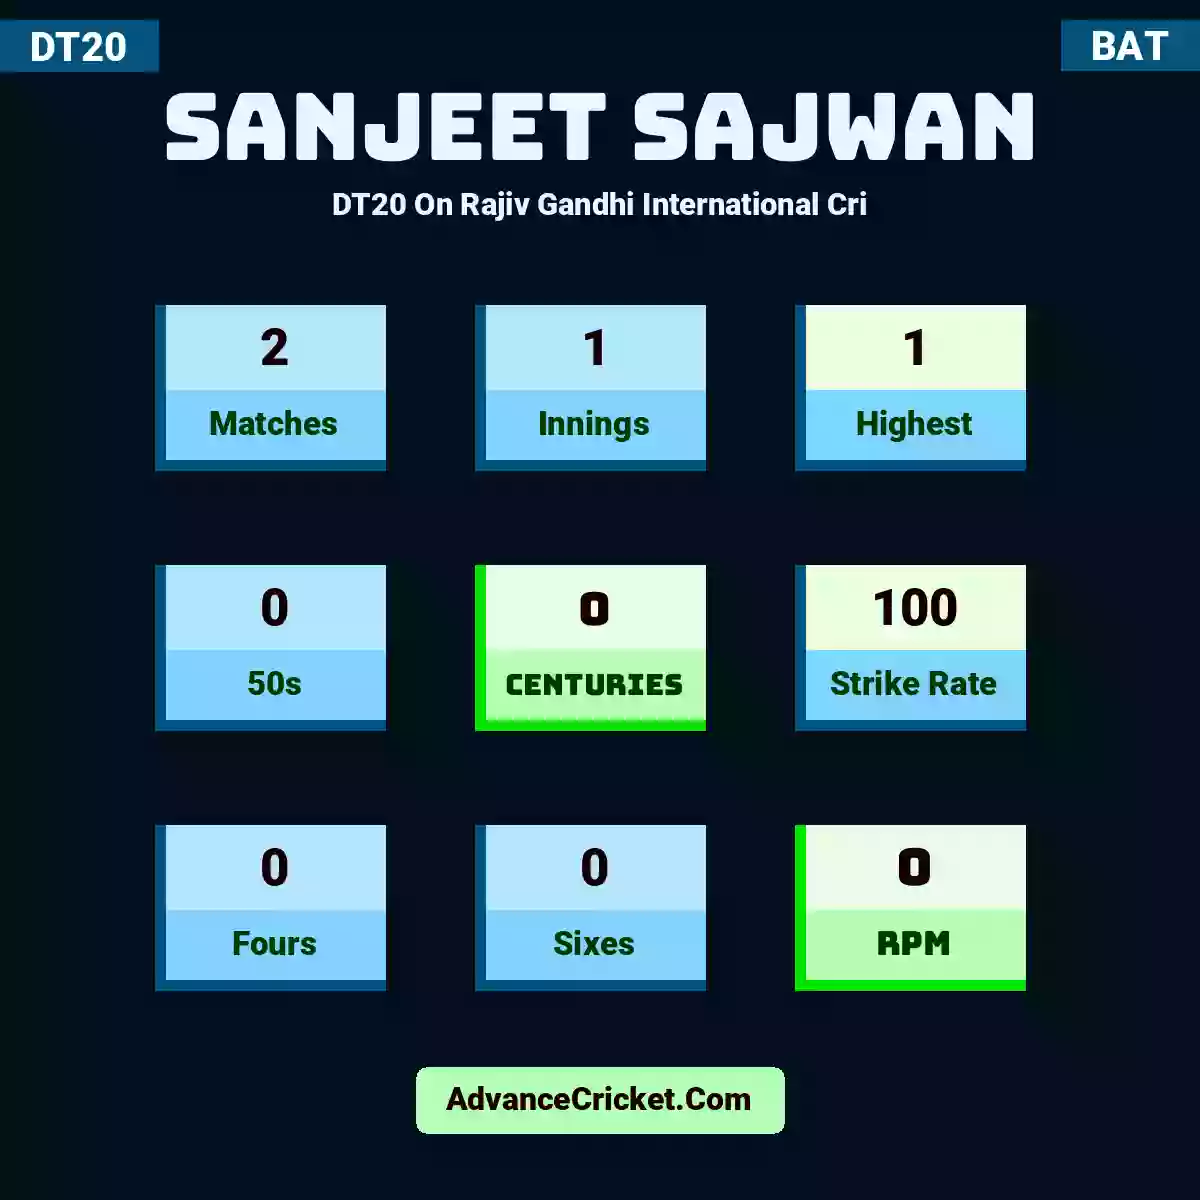 Sanjeet Sajwan DT20  On Rajiv Gandhi International Cri, Sanjeet Sajwan played 2 matches, scored 1 runs as highest, 0 half-centuries, and 0 centuries, with a strike rate of 100. S.Sajwan hit 0 fours and 0 sixes, with an RPM of 0.